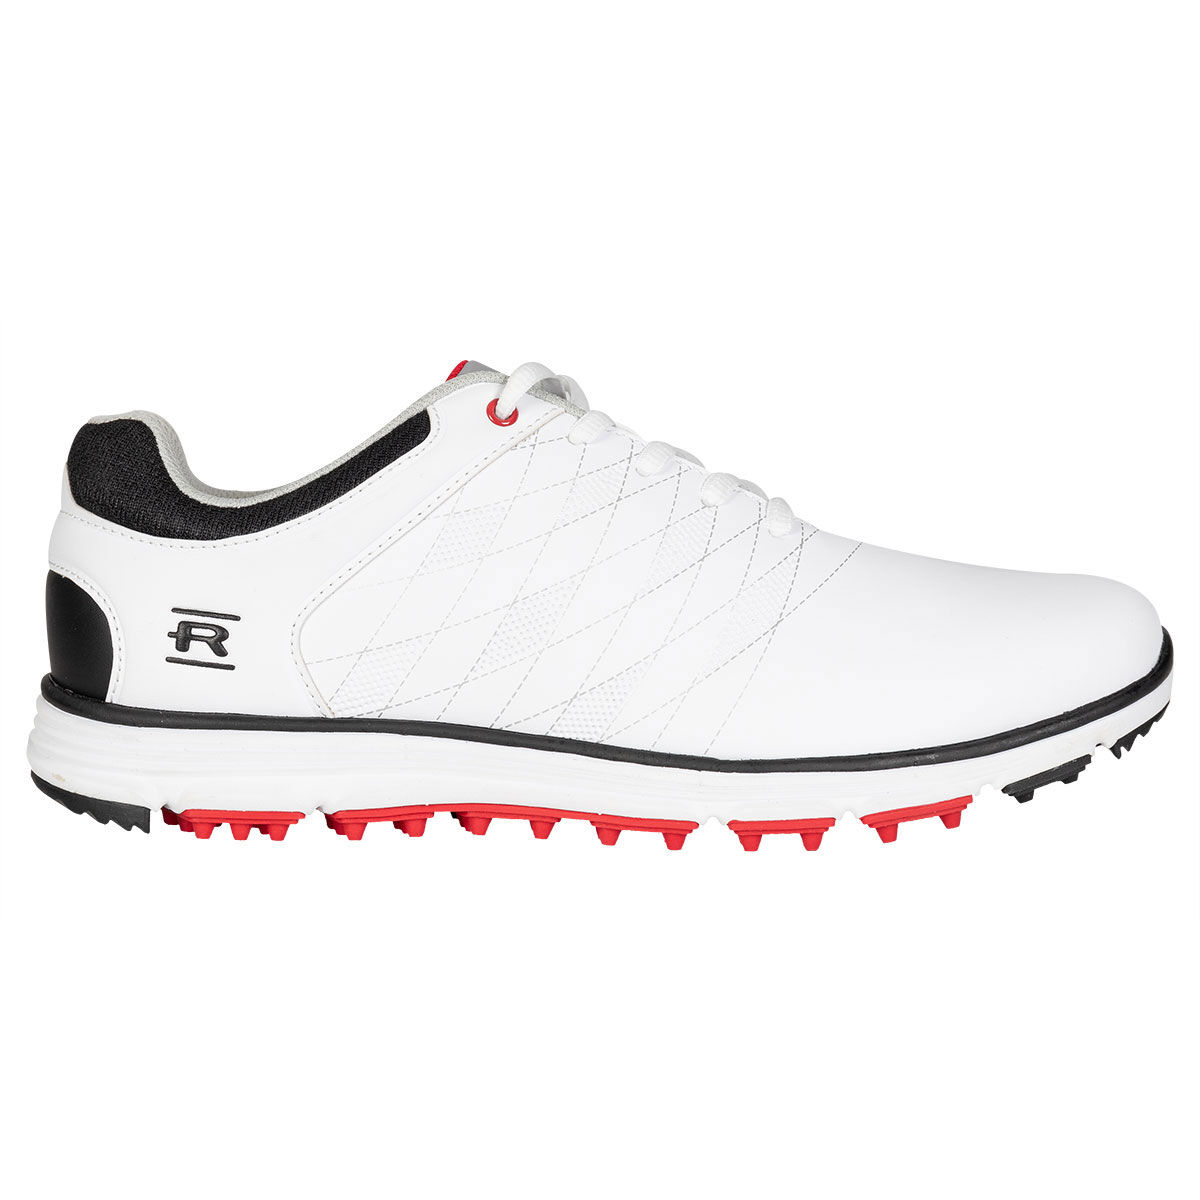 jd sports golf shoes